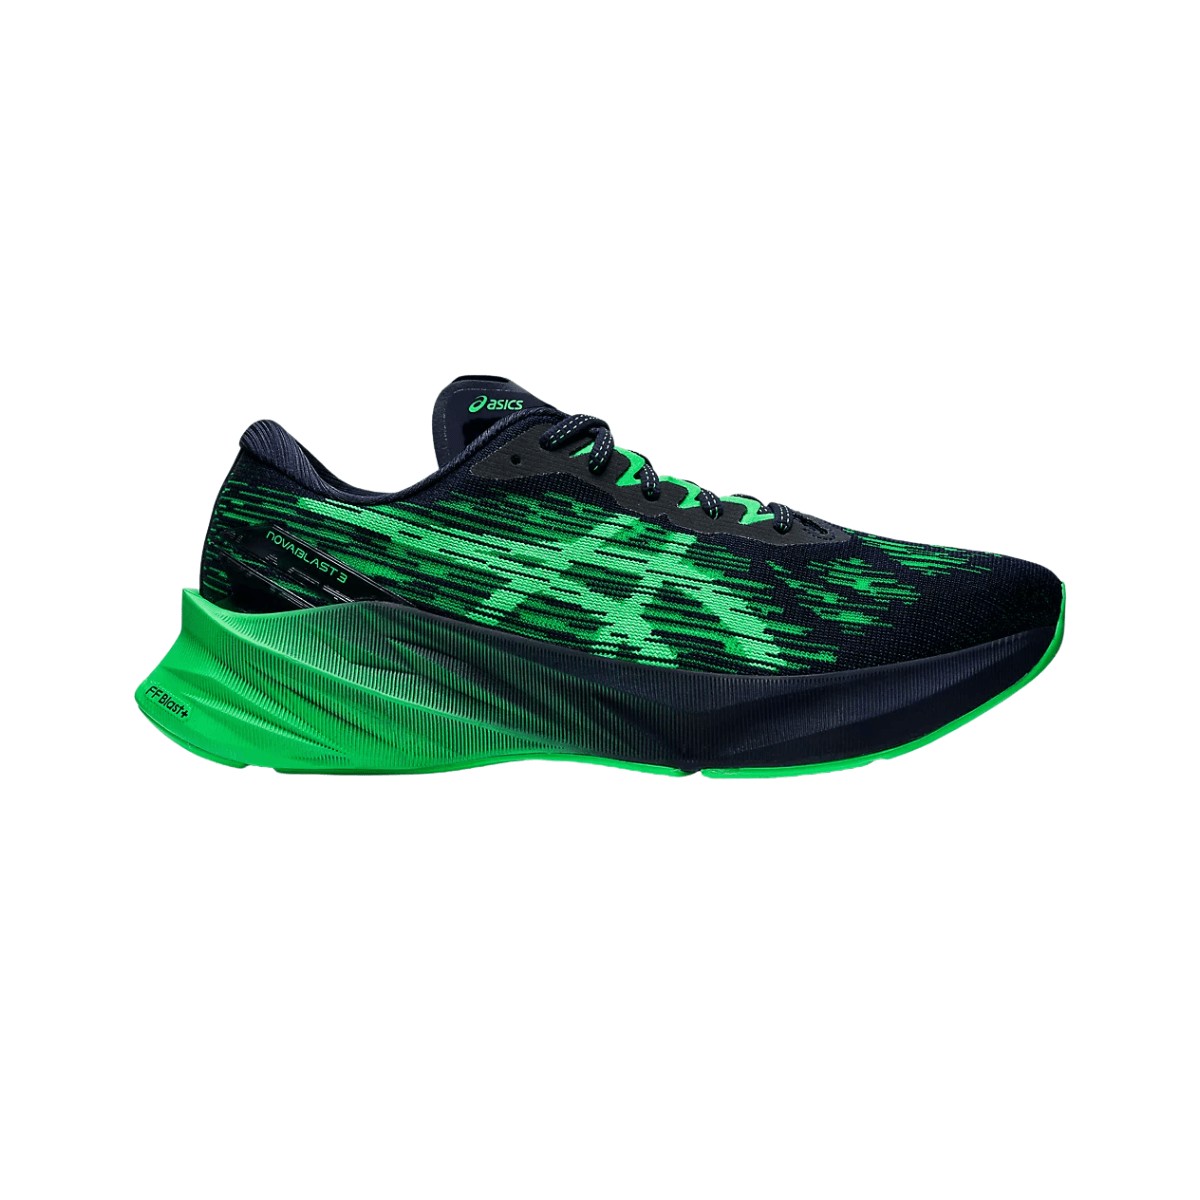 Shoes Asics Novablast 3 Black Green AW22, Size 42,5 - EUR